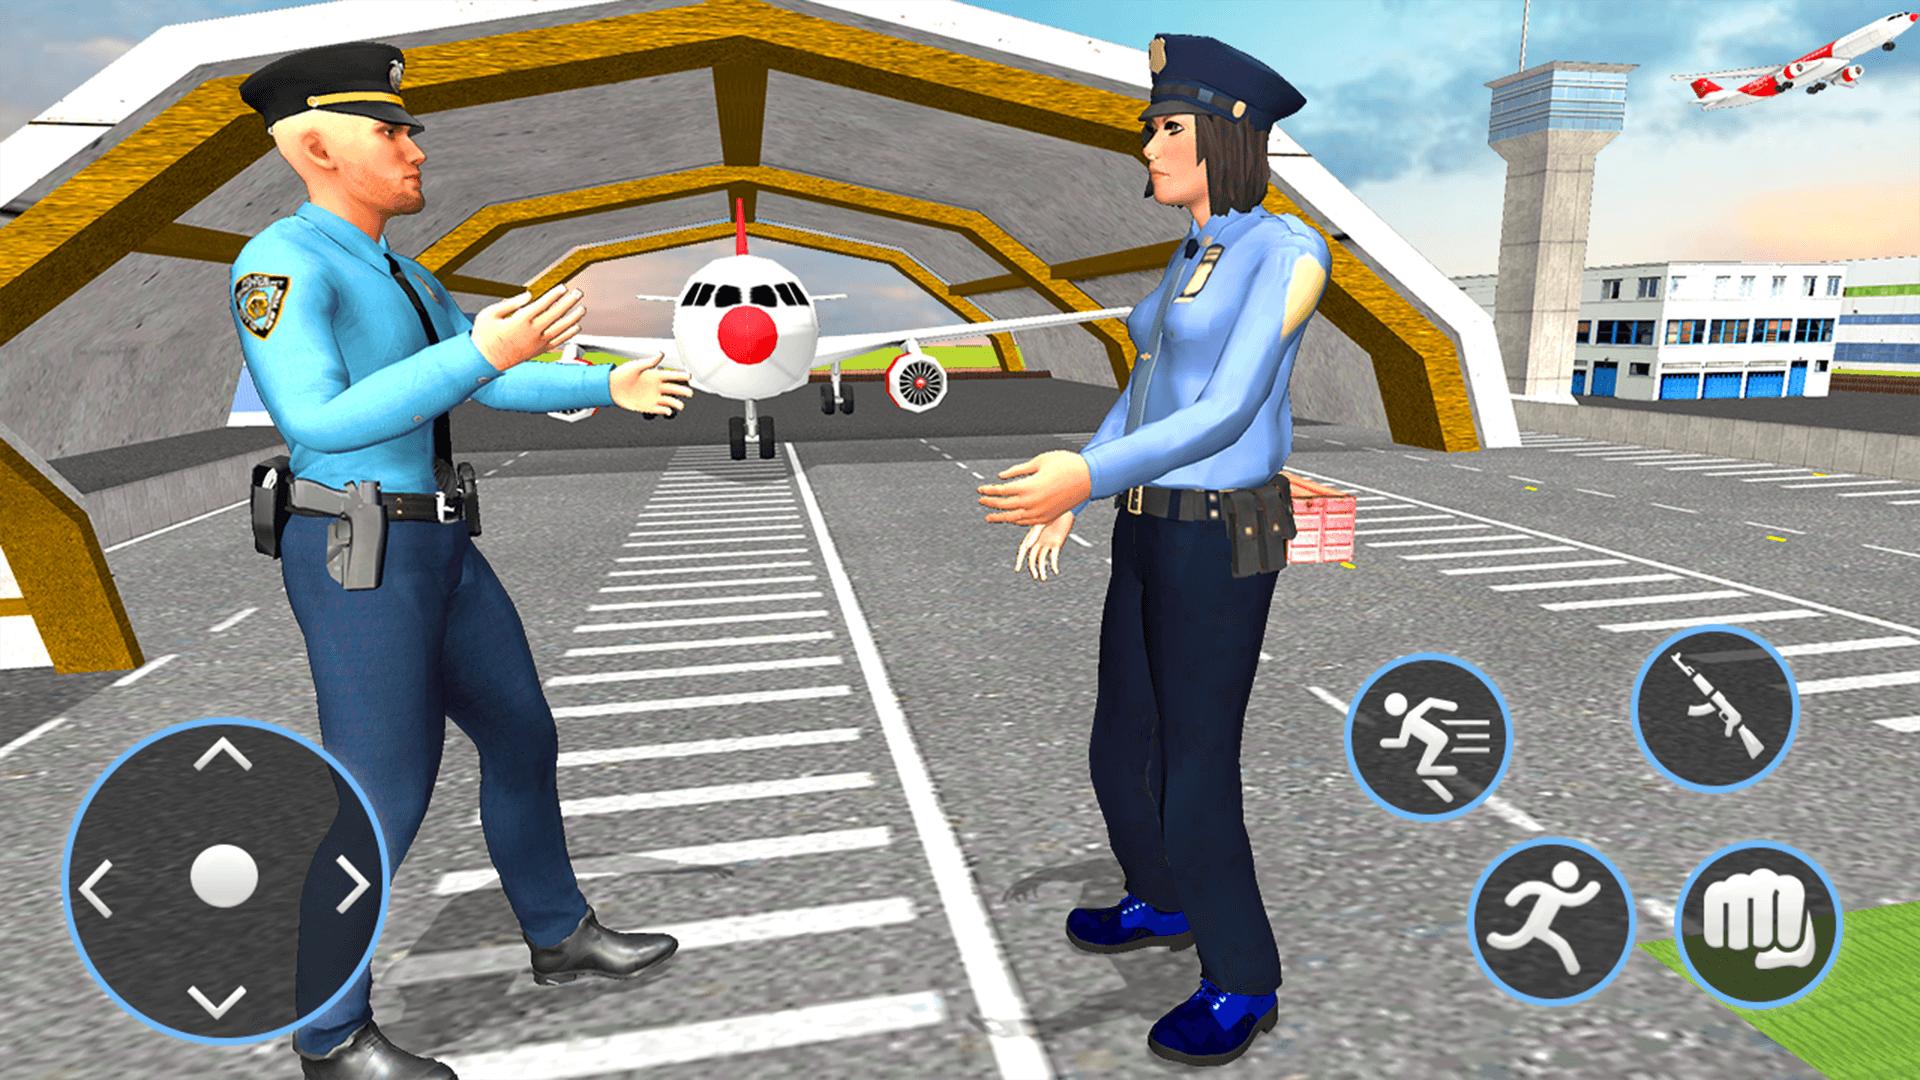 Sakura School Simulator policewoman. Такс офицер Сакура скул симулятор. Police girls Sakura School Simulator. Airport security игра